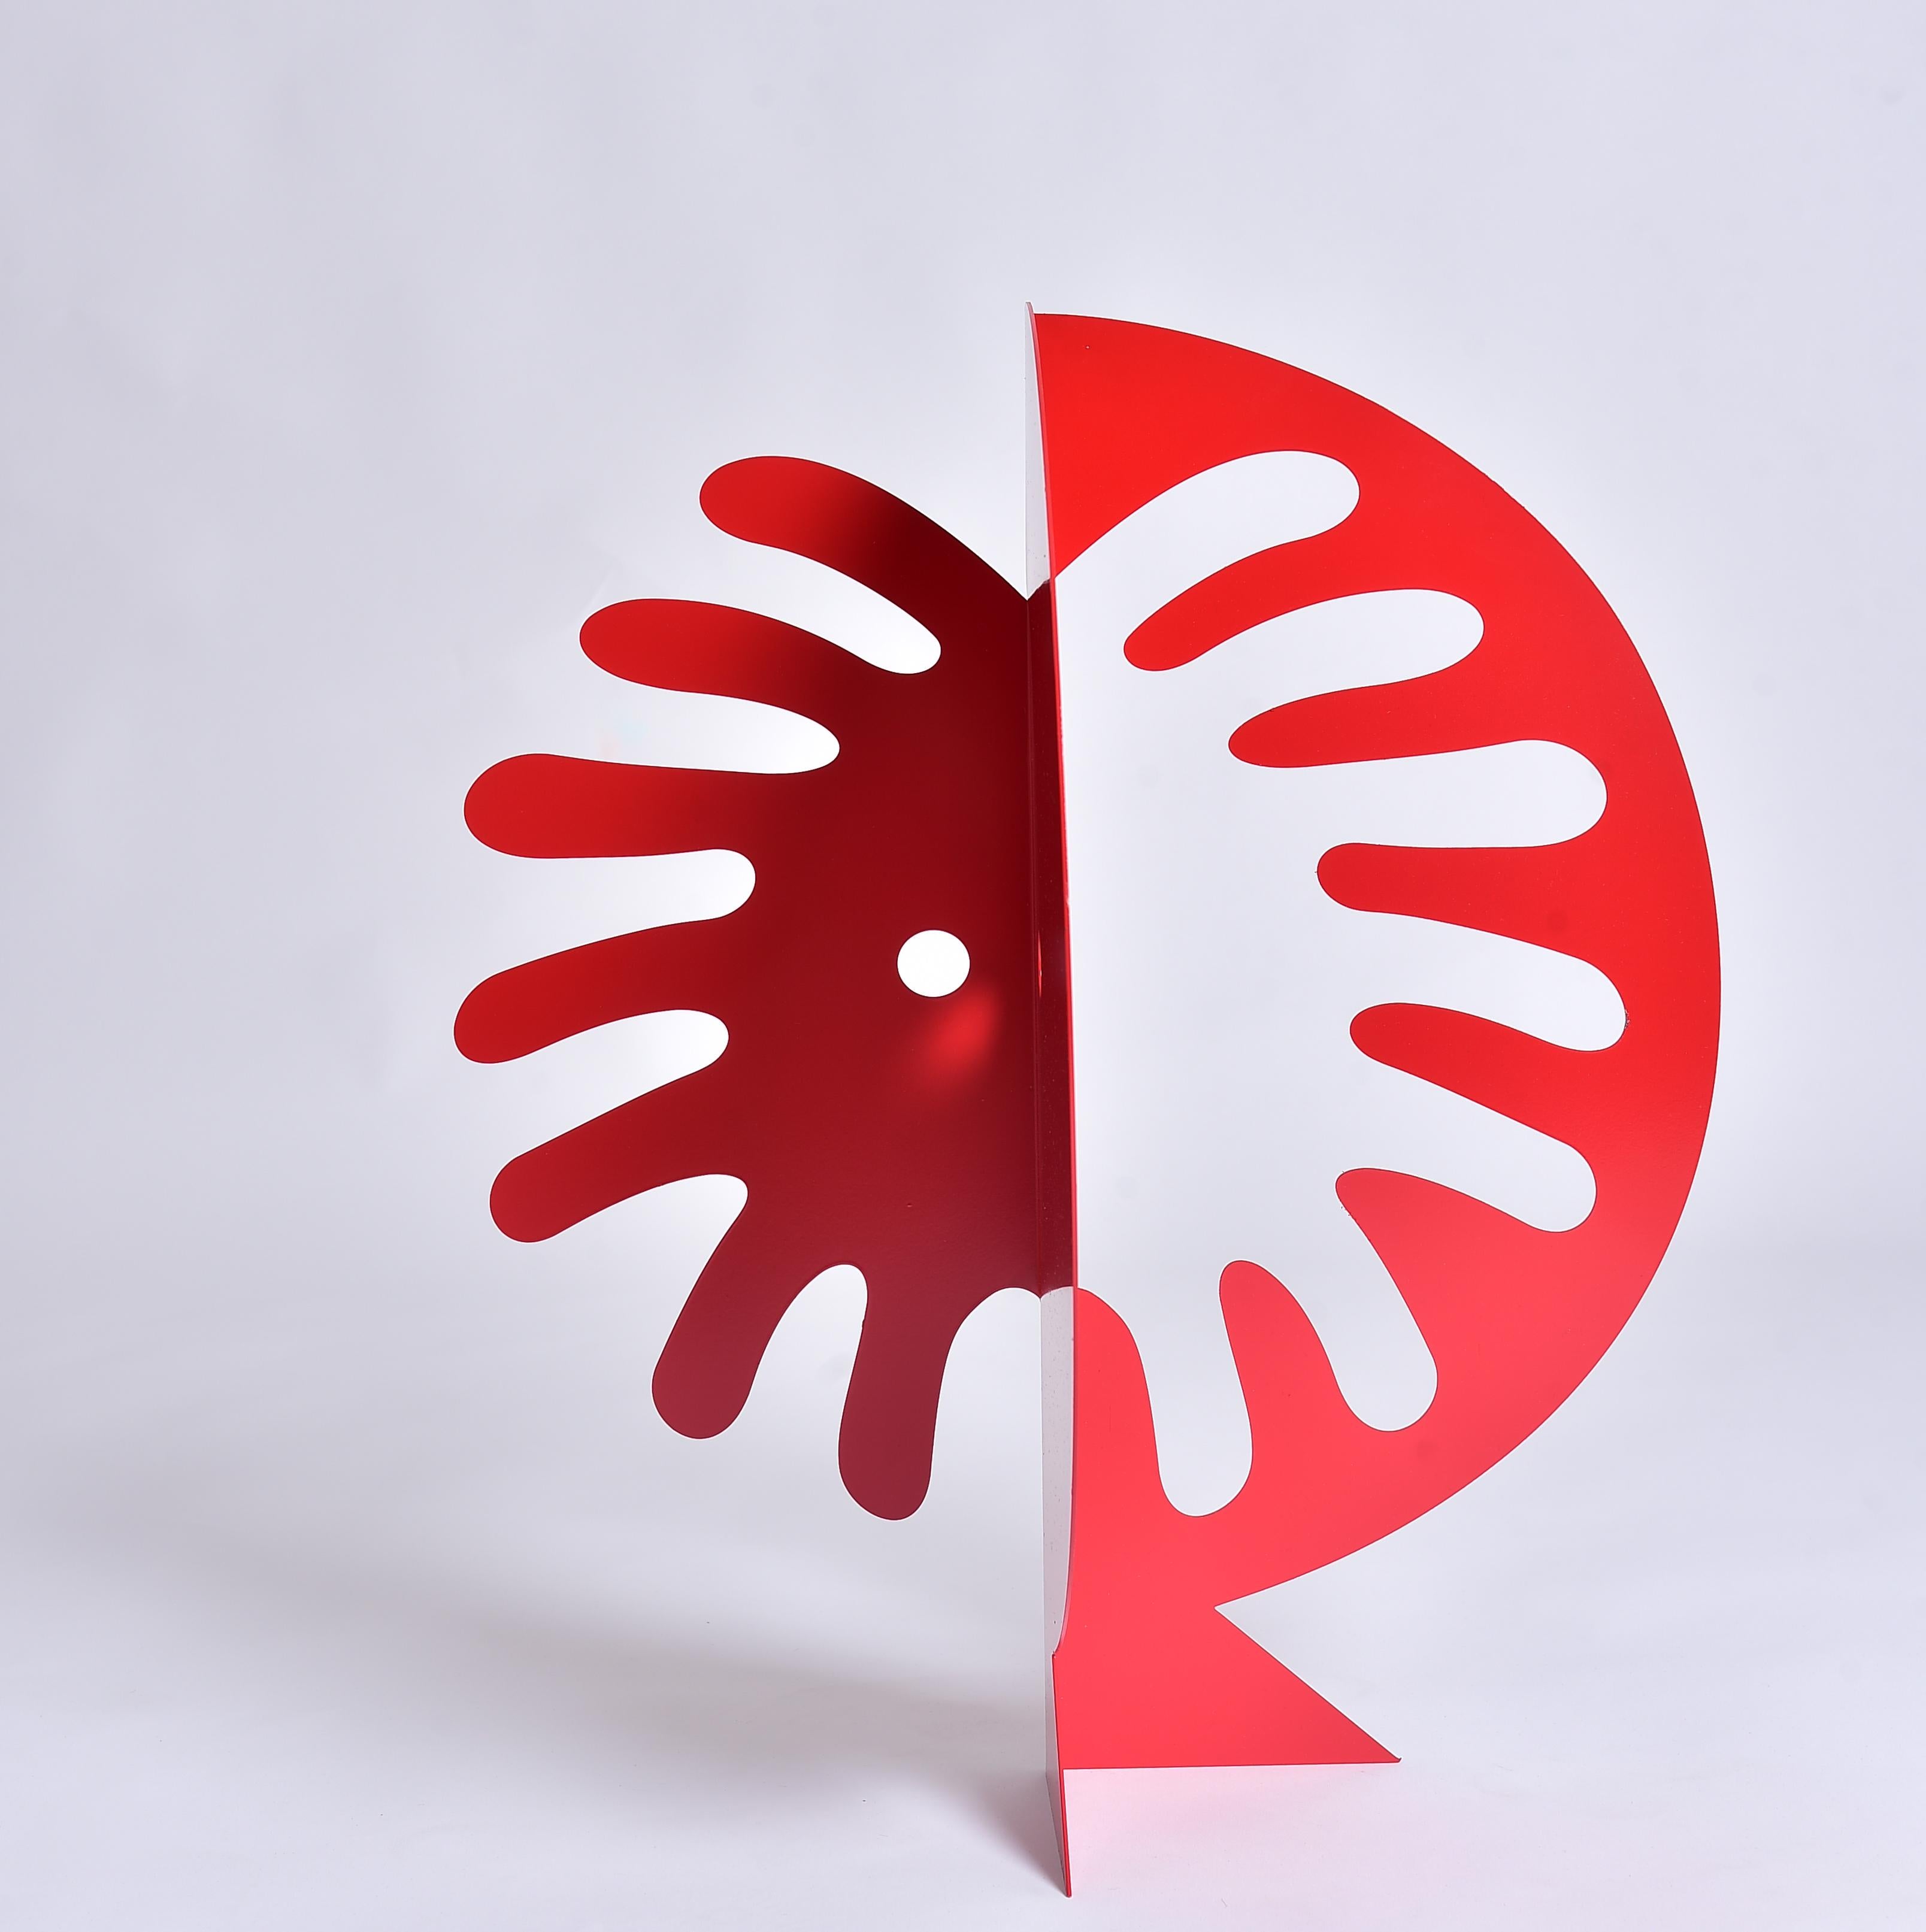 Rote Sonne – abstrakte figurative Skulptur